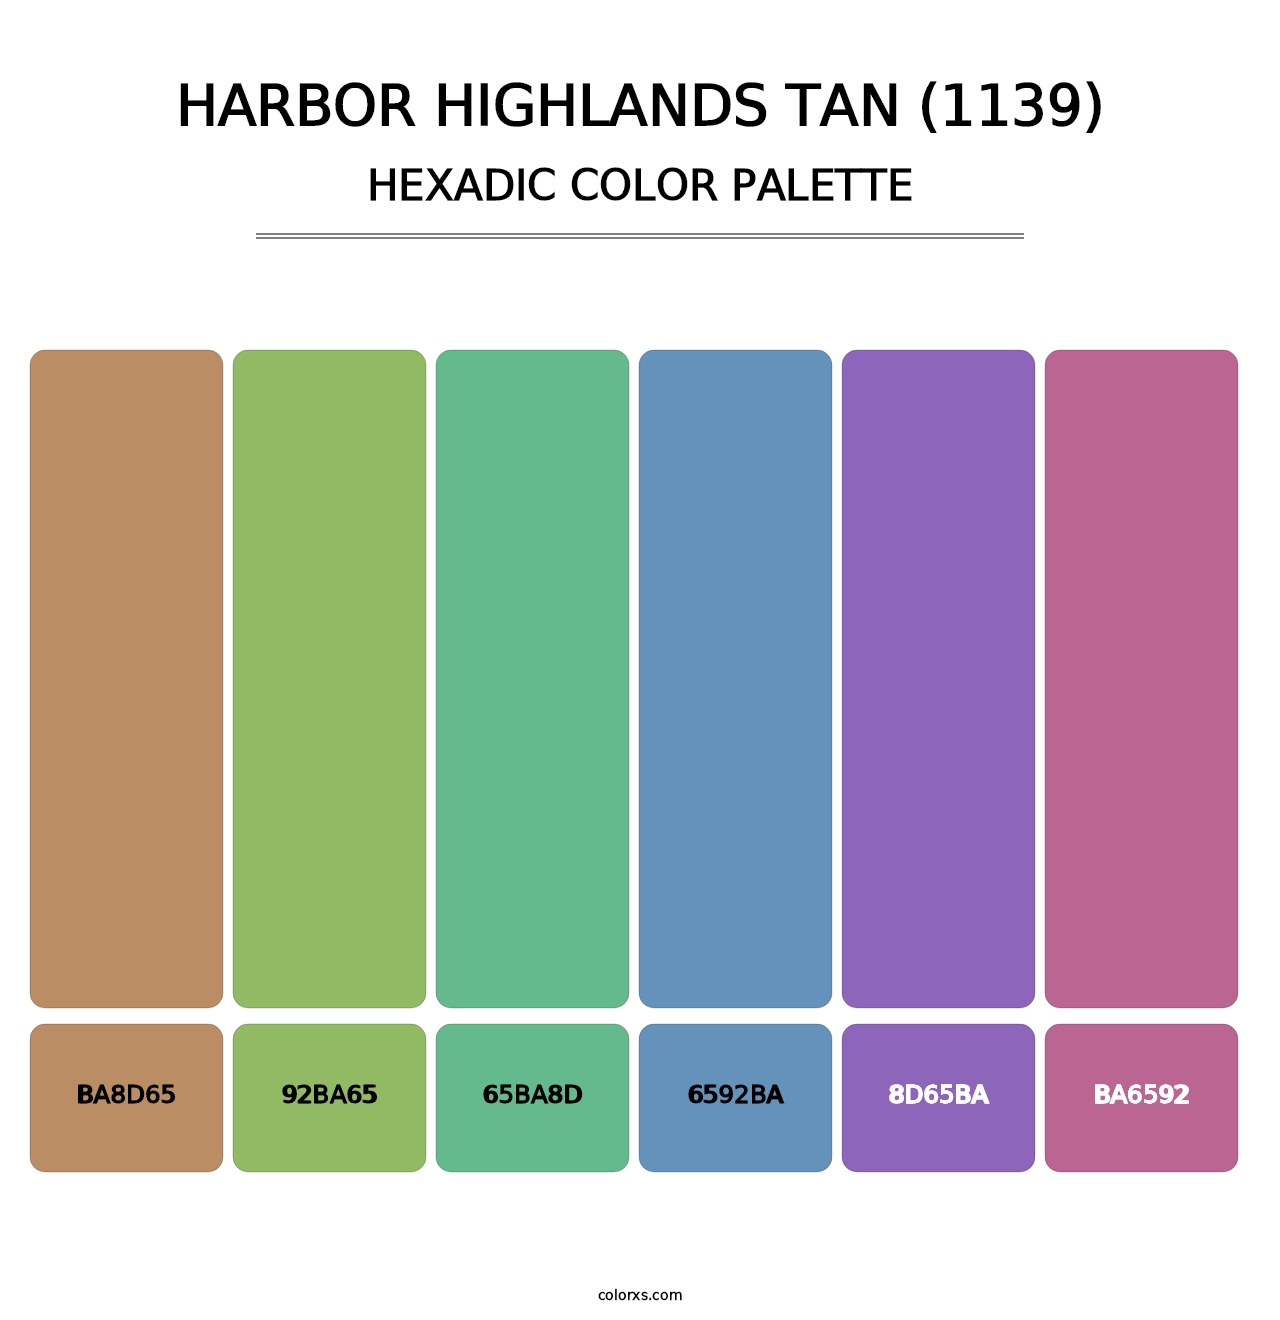 Harbor Highlands Tan (1139) - Hexadic Color Palette